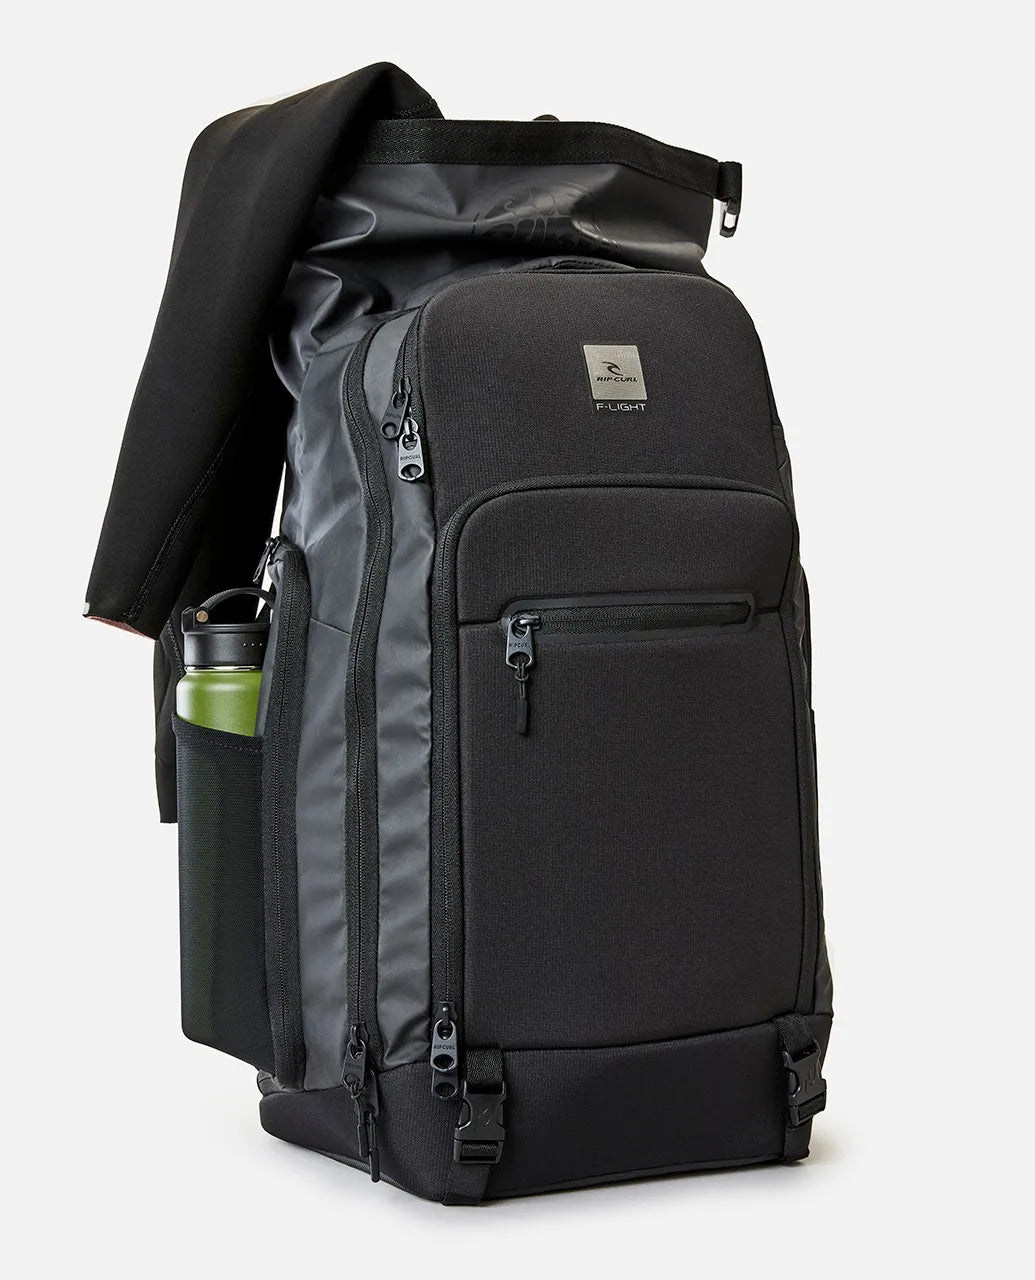 Ripcurl Flight Surf Backpack 40L - Black Backpacks